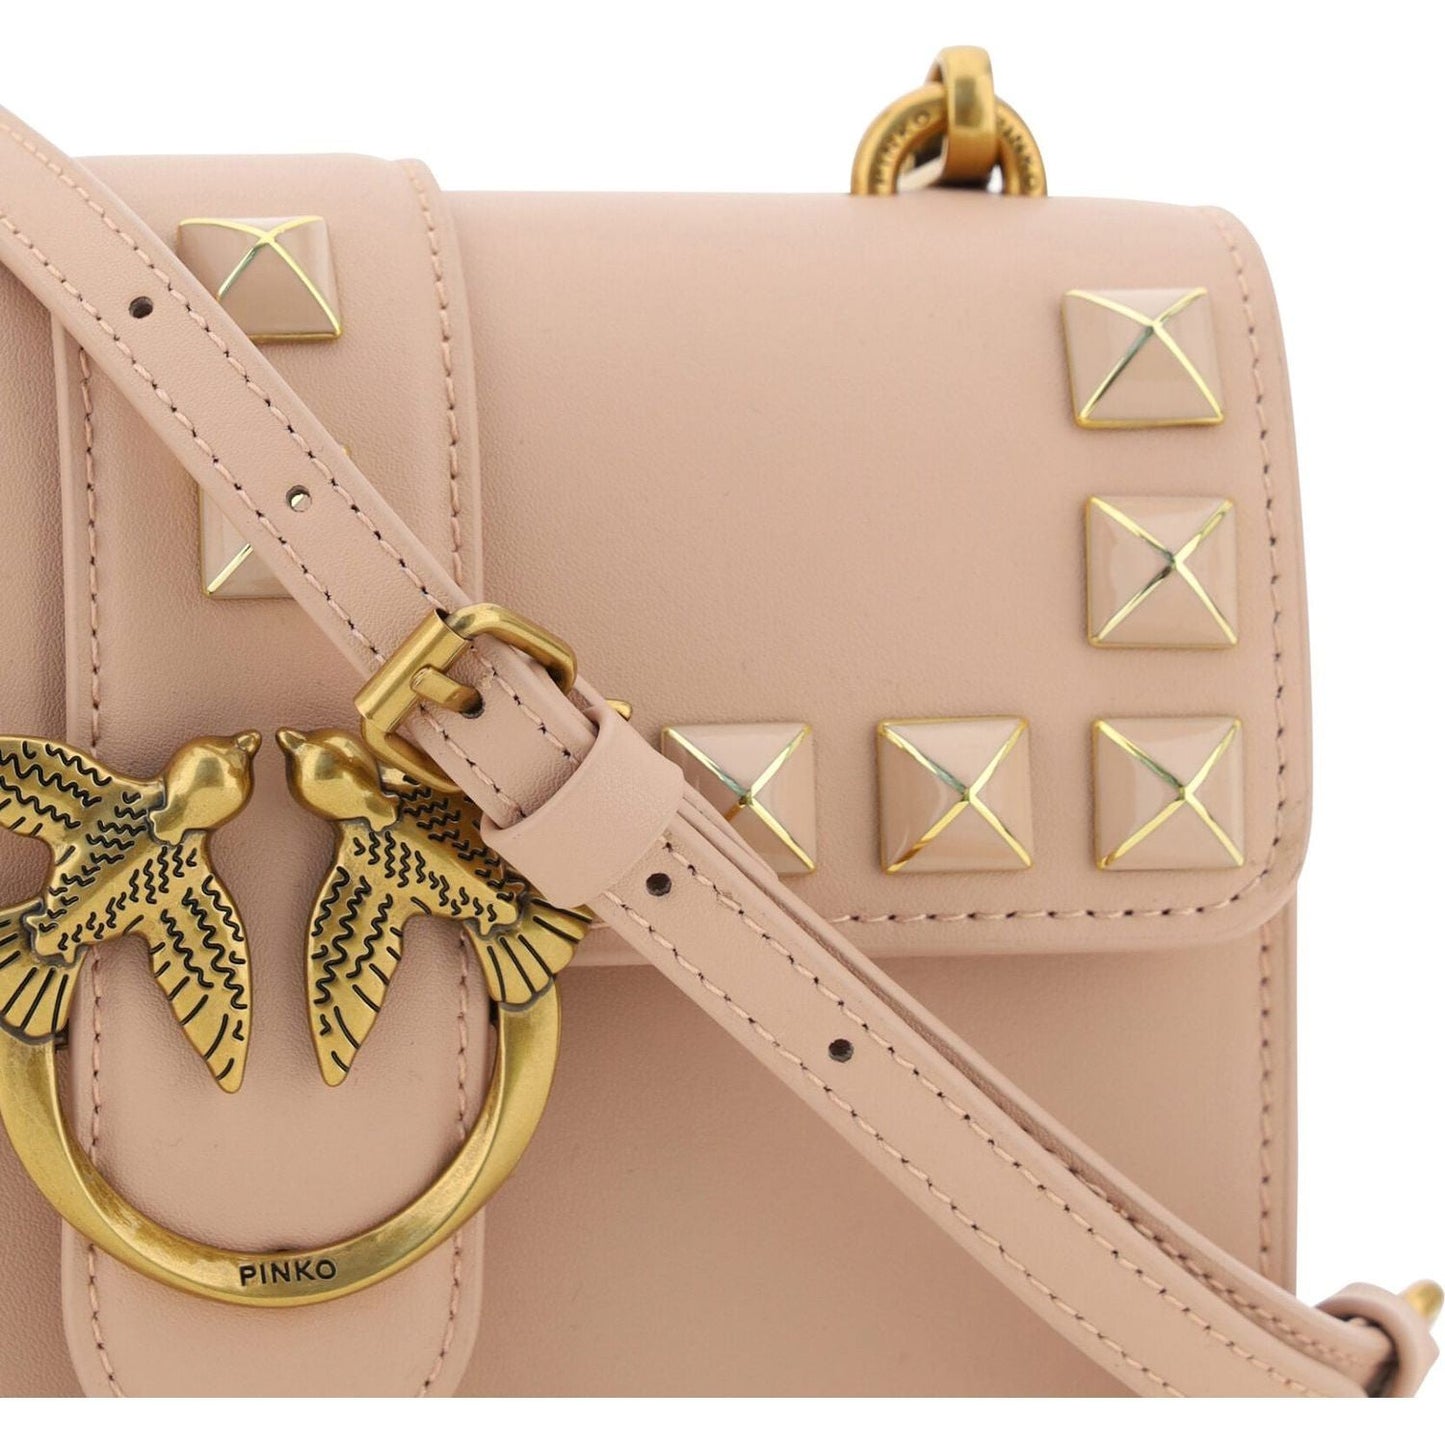 PINKO Chic Pink Cipria Mini Love Shoulder Bag pink-leather-mini-love-one-shoulder-bag 95E83465-66BE-448E-A258-E351DEBEE265-scaled-577f0b5d-5ee.jpg